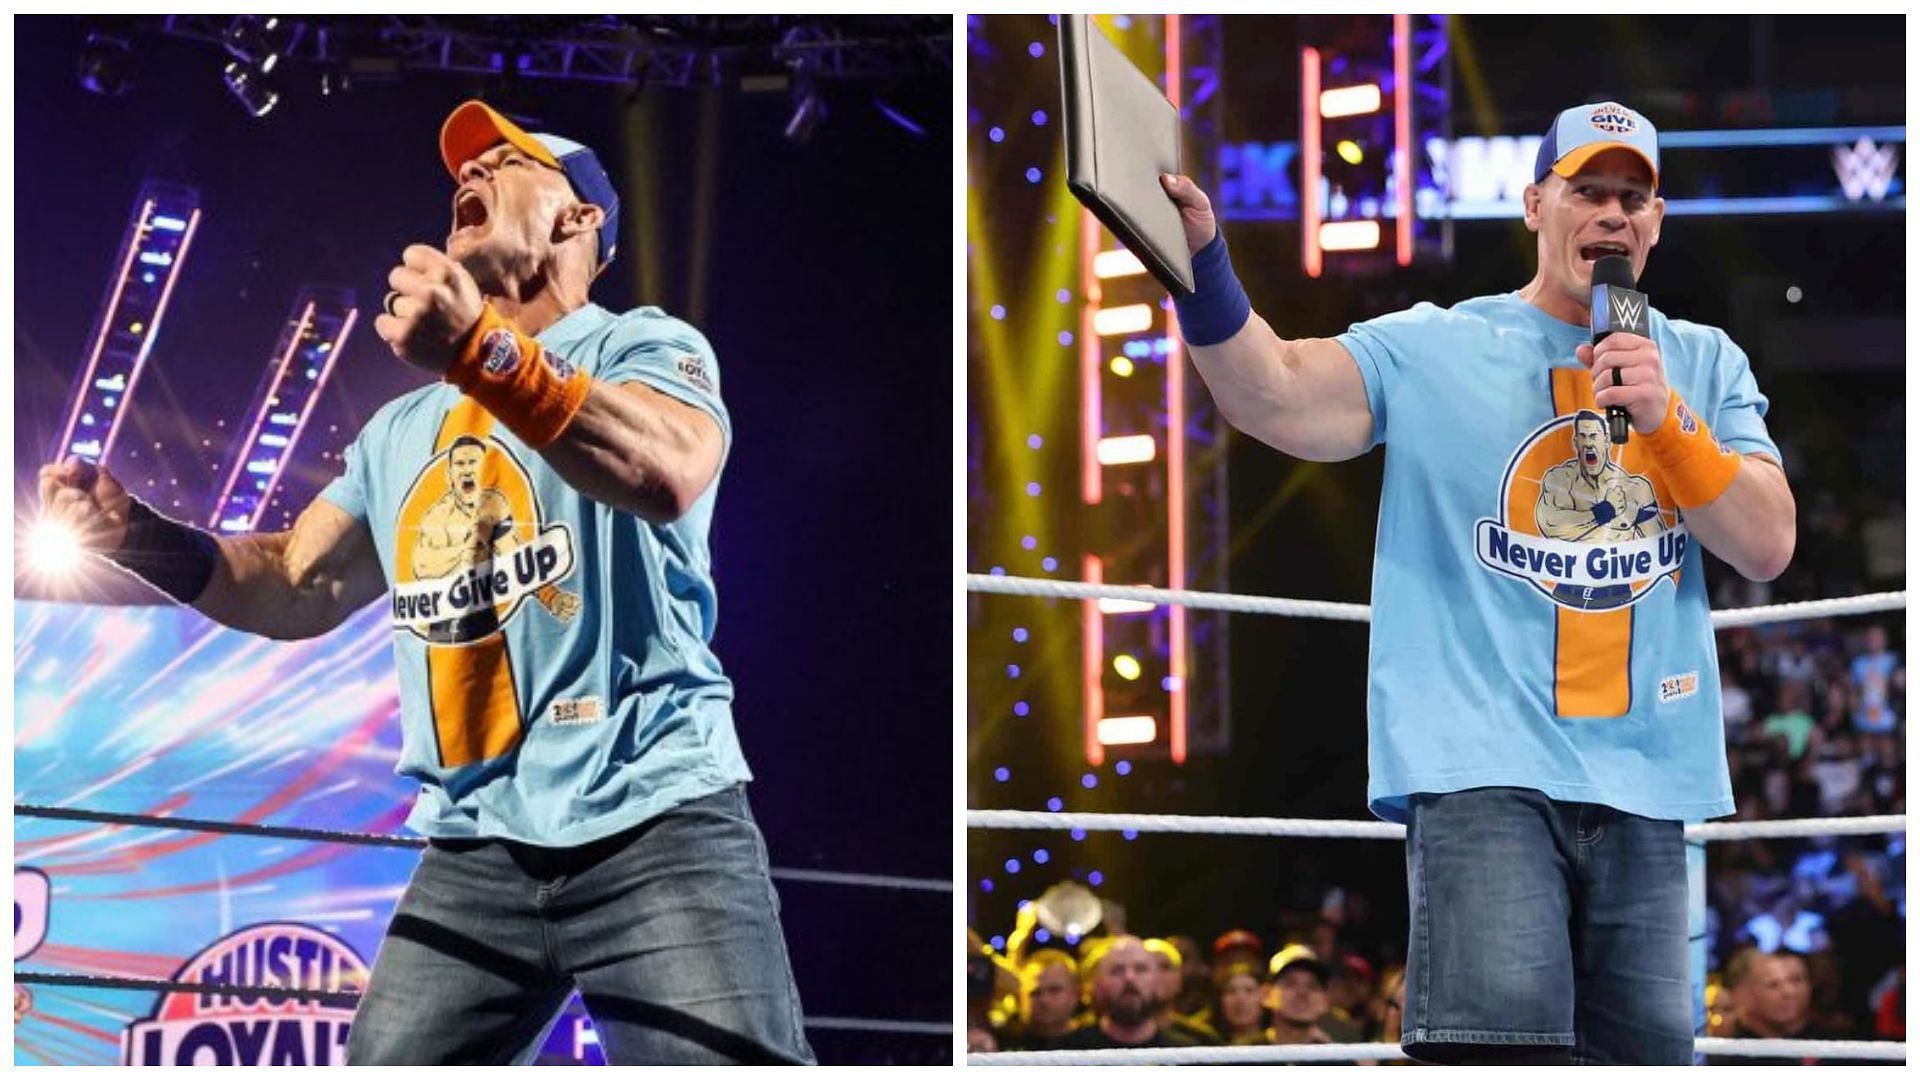 John Cena is a 16-time World Champion.